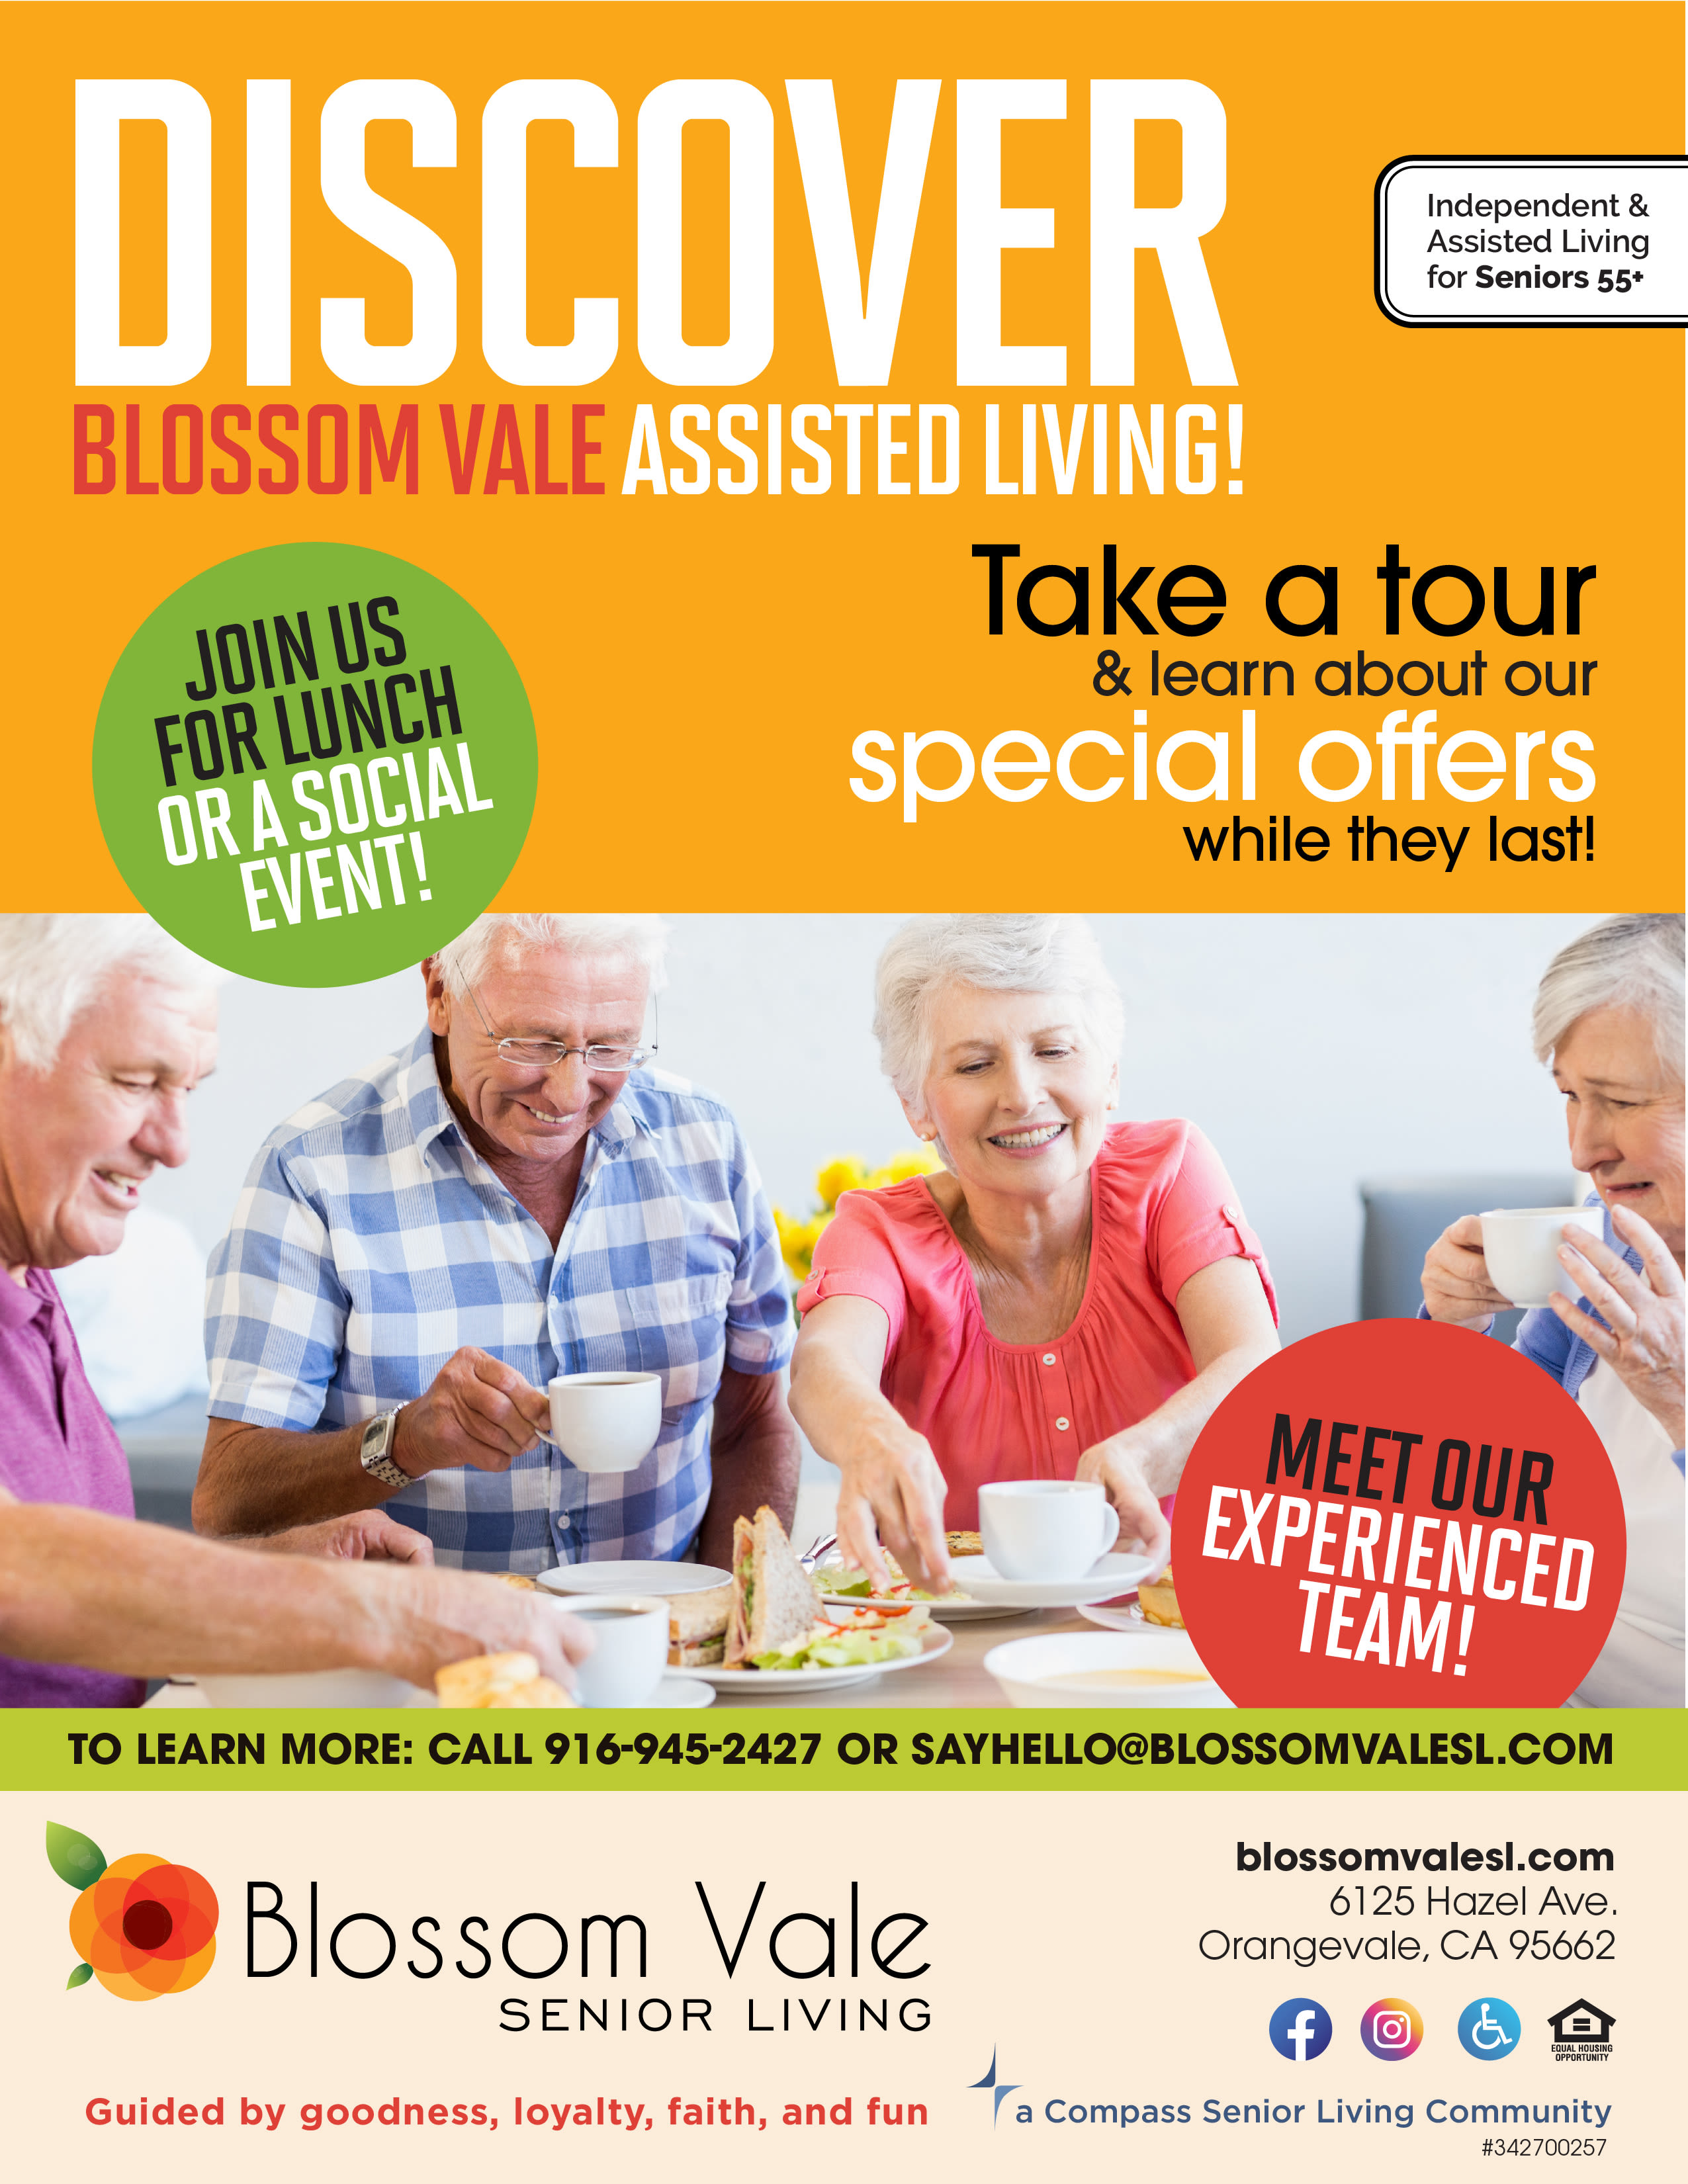 Monthly Special at Blossom Vale Senior Living in Orangevale, California